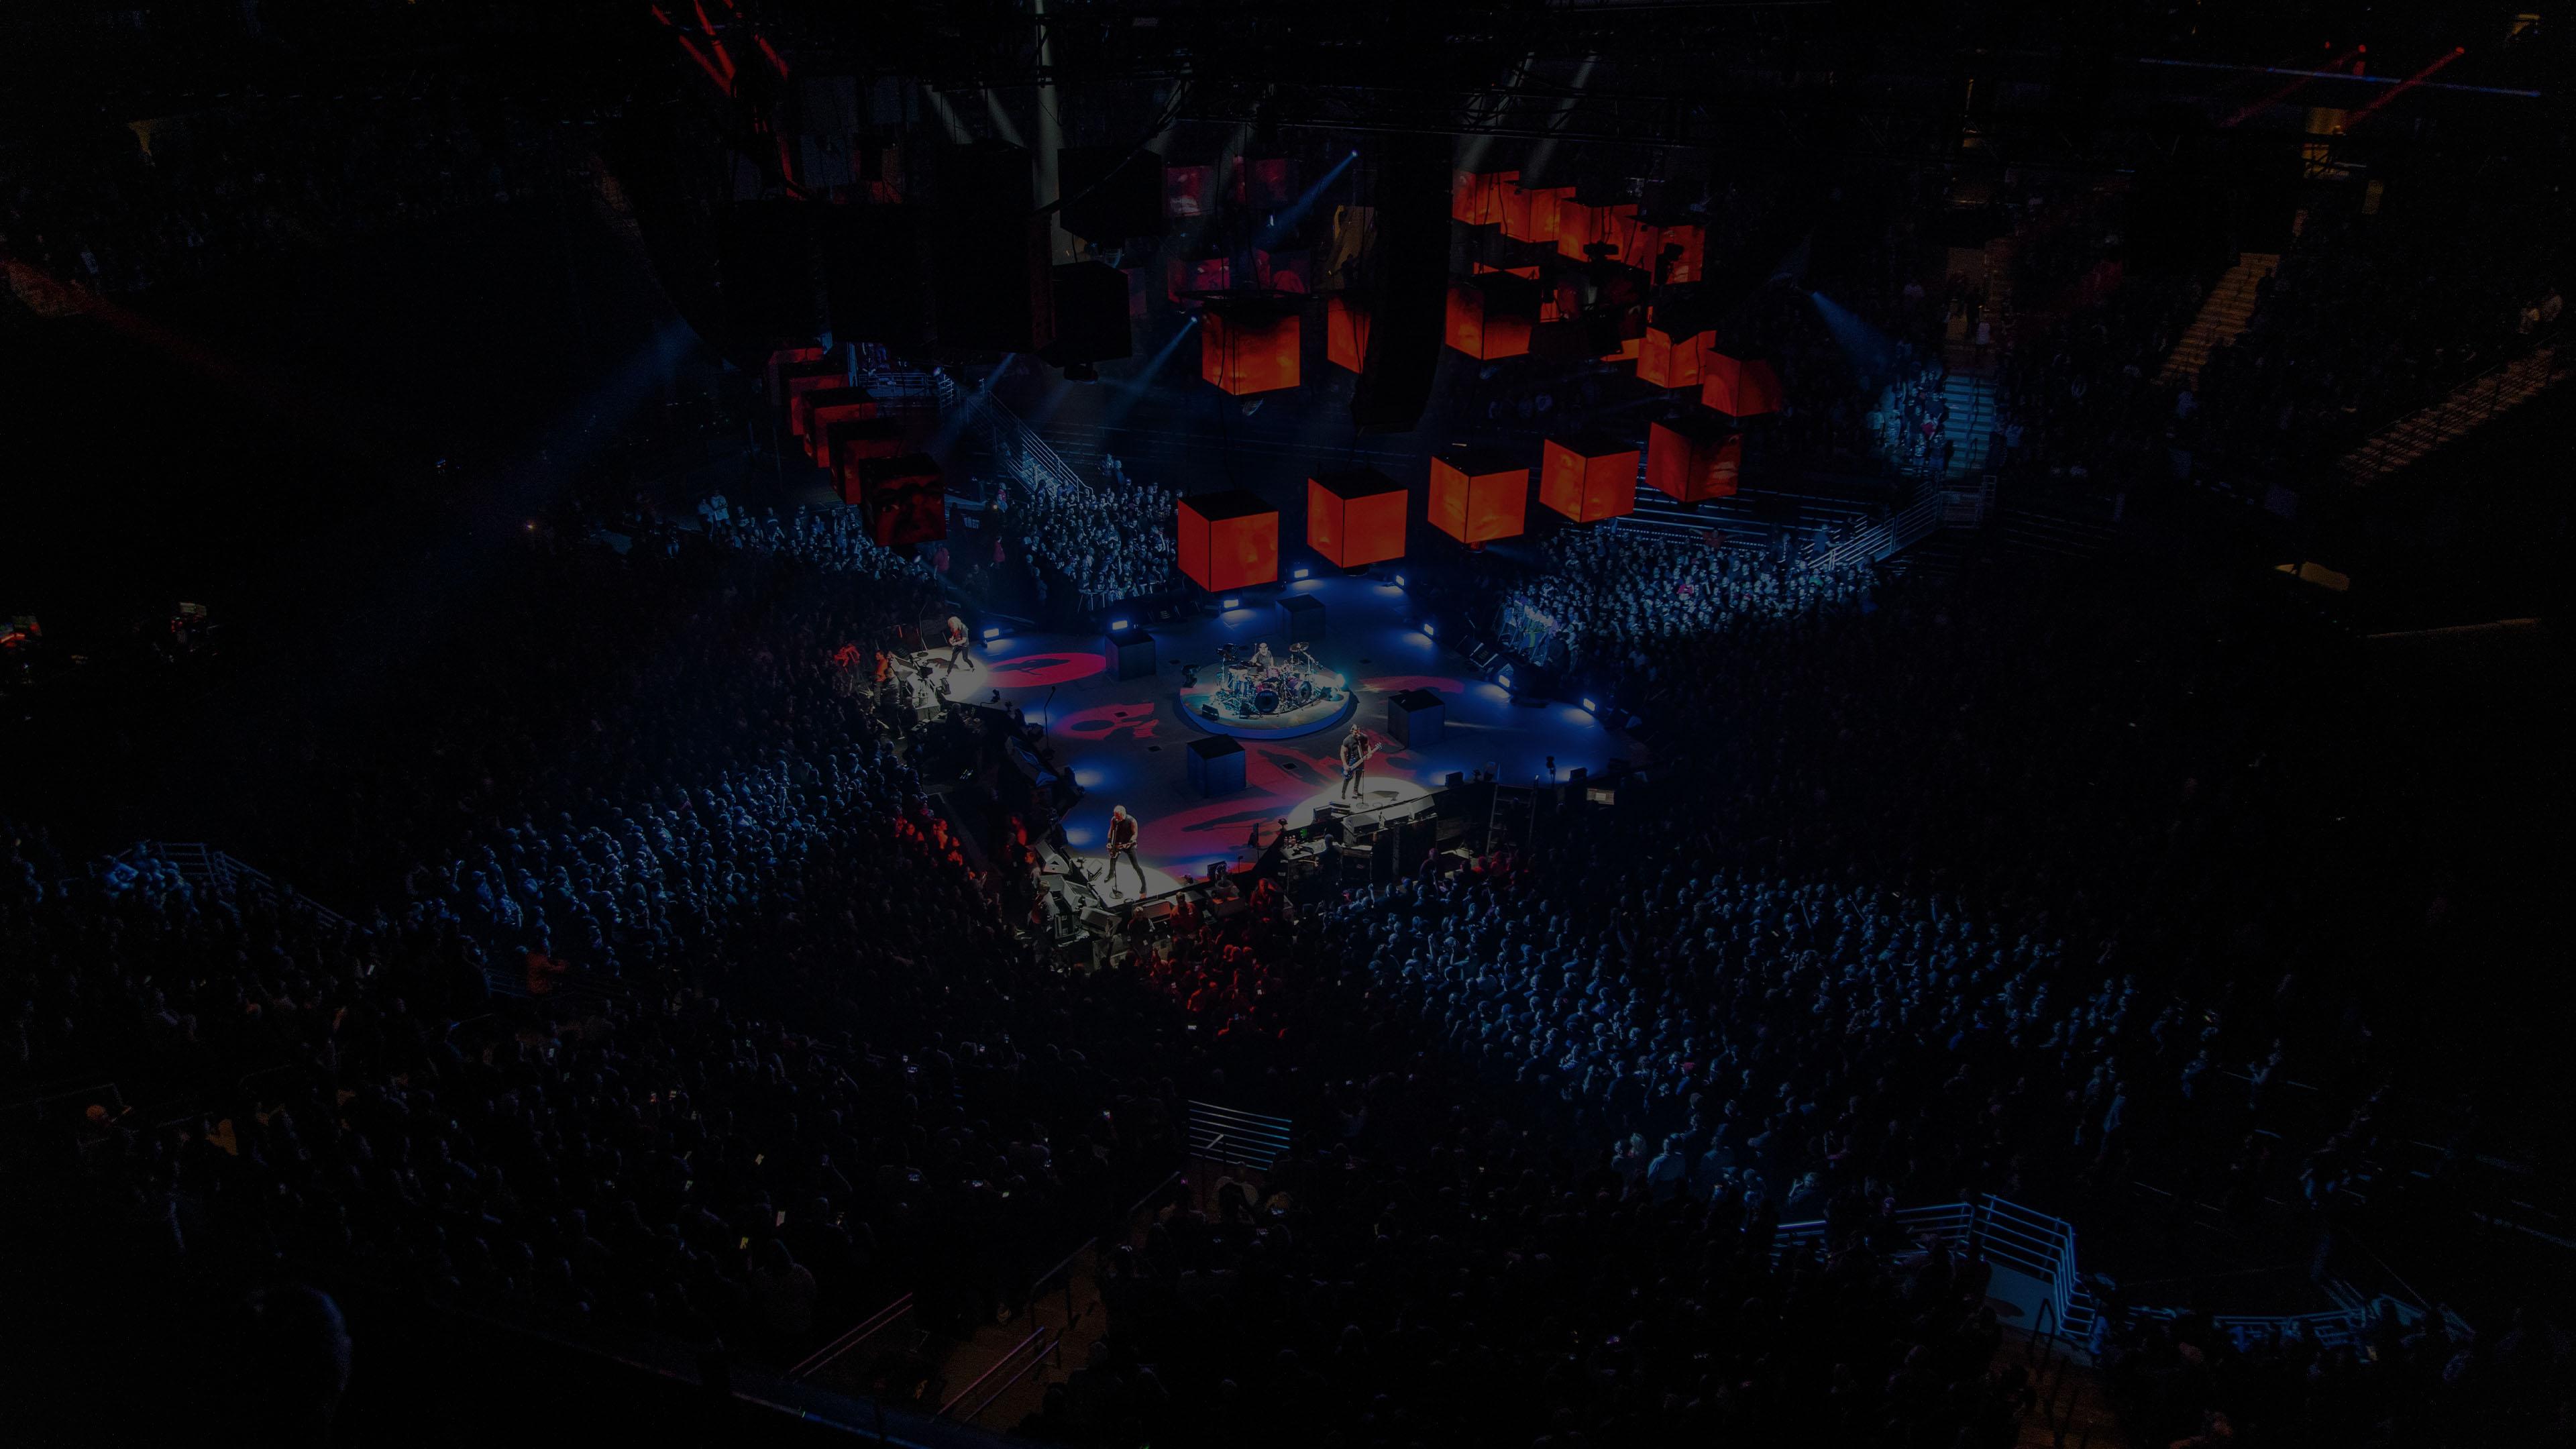 Metallica at Vivint Smart Home Arena in Salt Lake City, UT on November 30, 2018